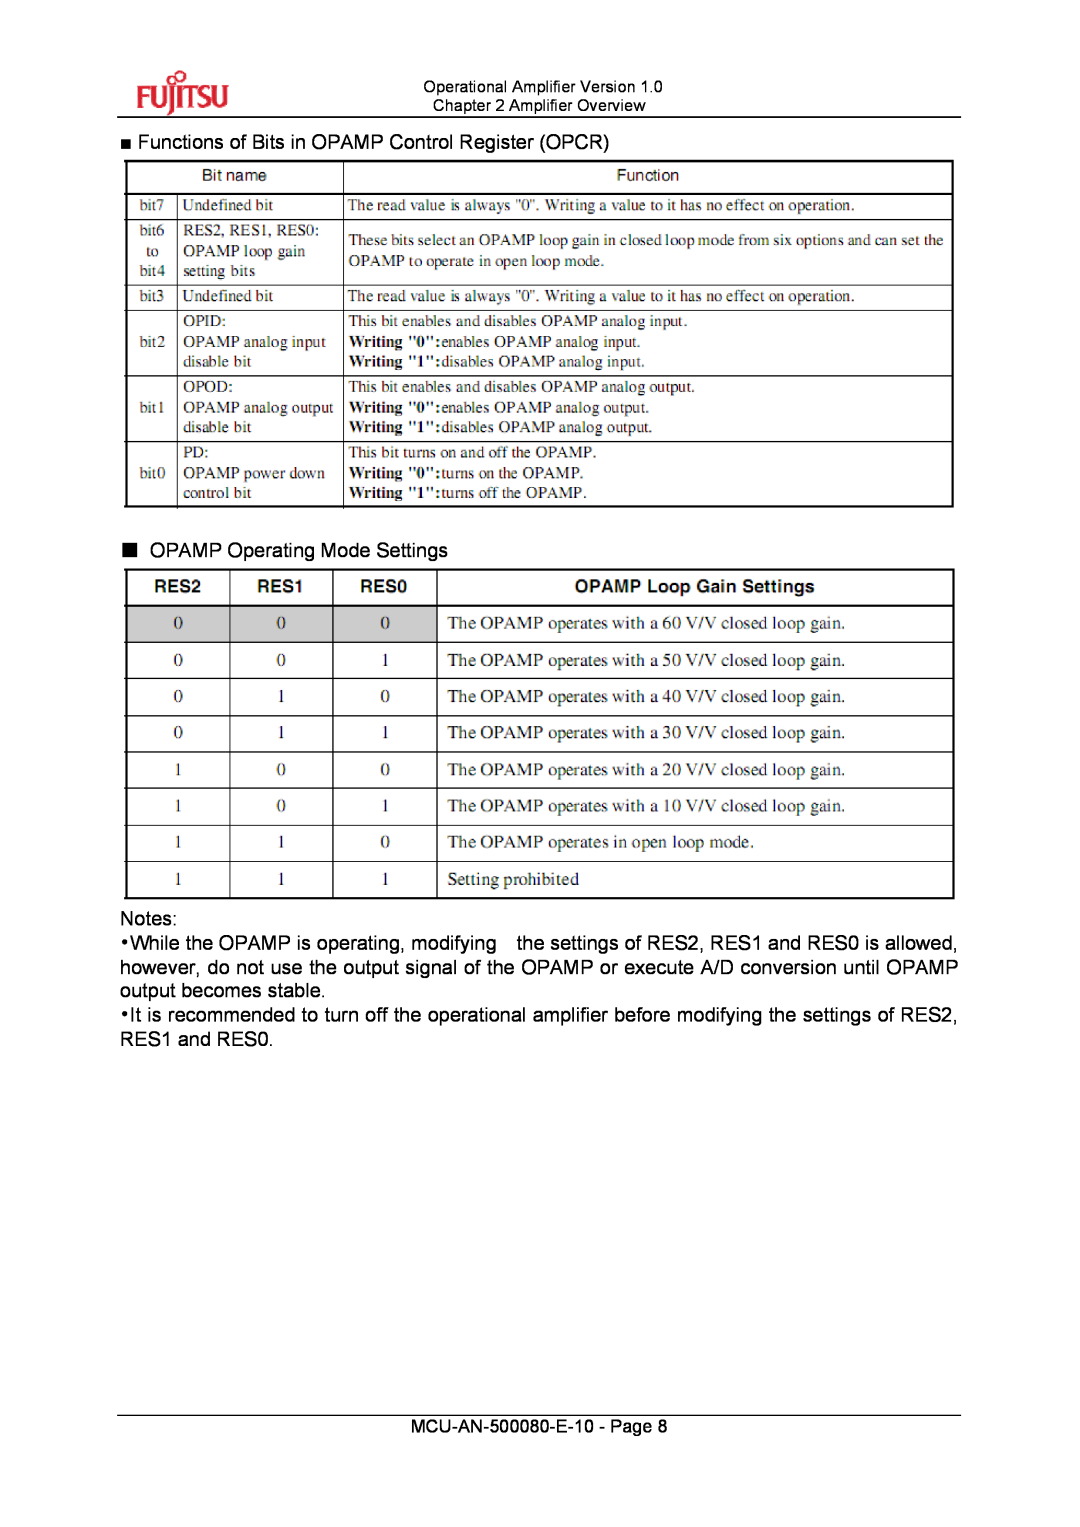 Fujitsu MB95F430 manual Functions of Bits in OPAMP Control Register OPCR 